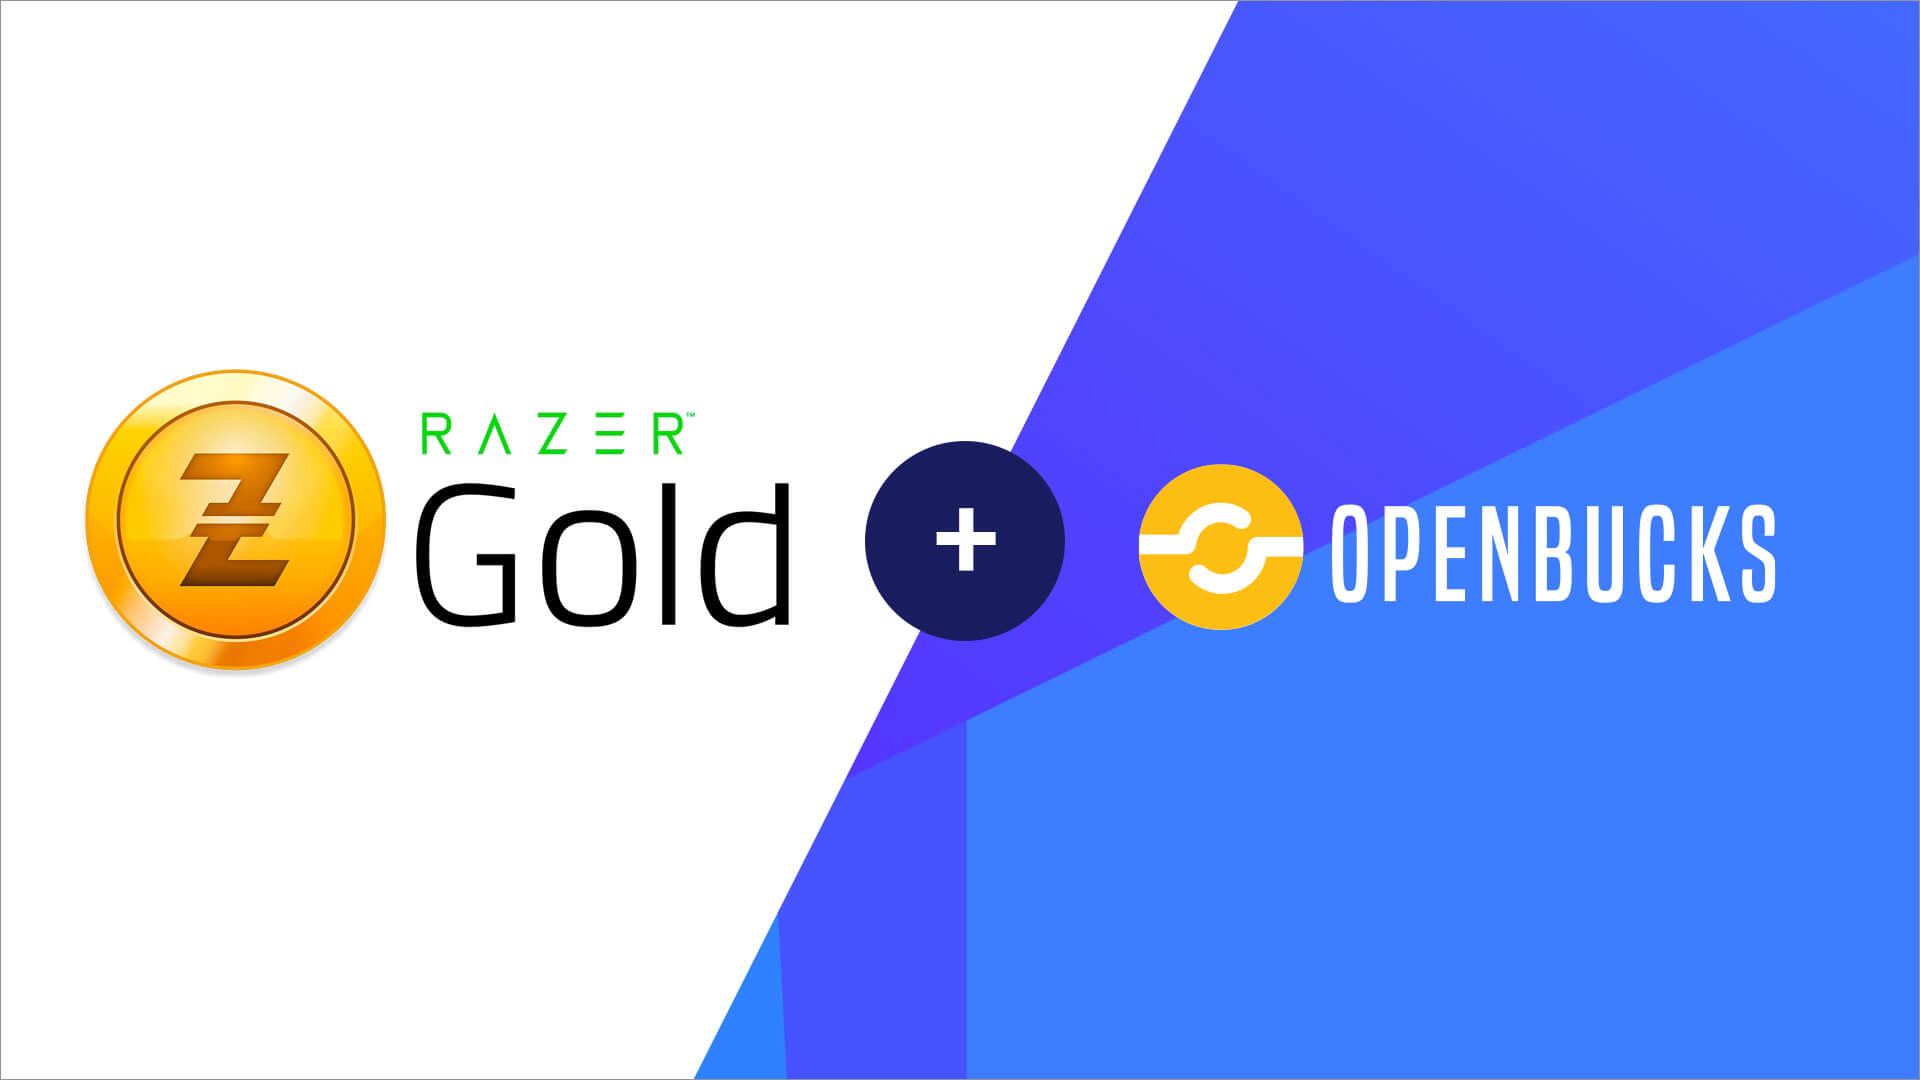 Pay with gift cards on Razer Gold via Openbucks razergold.jpg